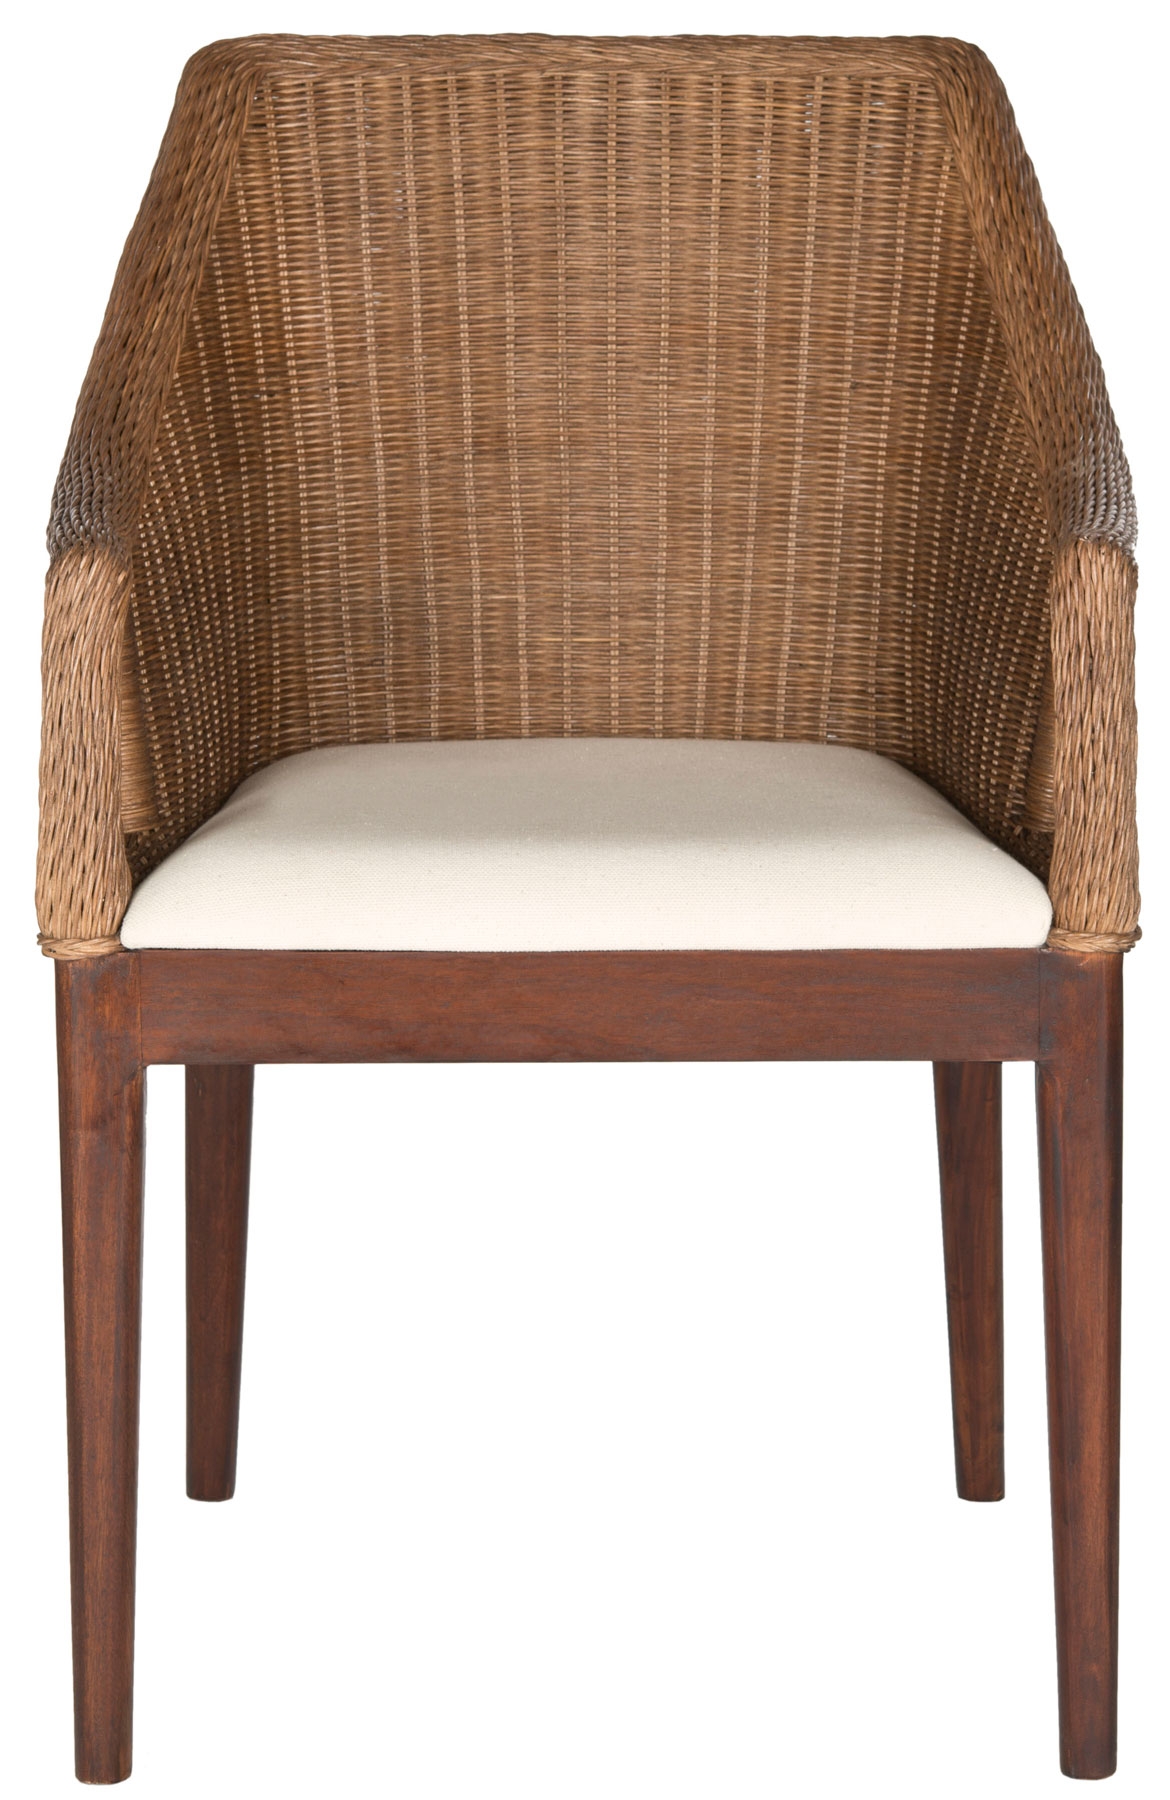 Enrico Arm Chair - Multi Brown - Safavieh - Image 1